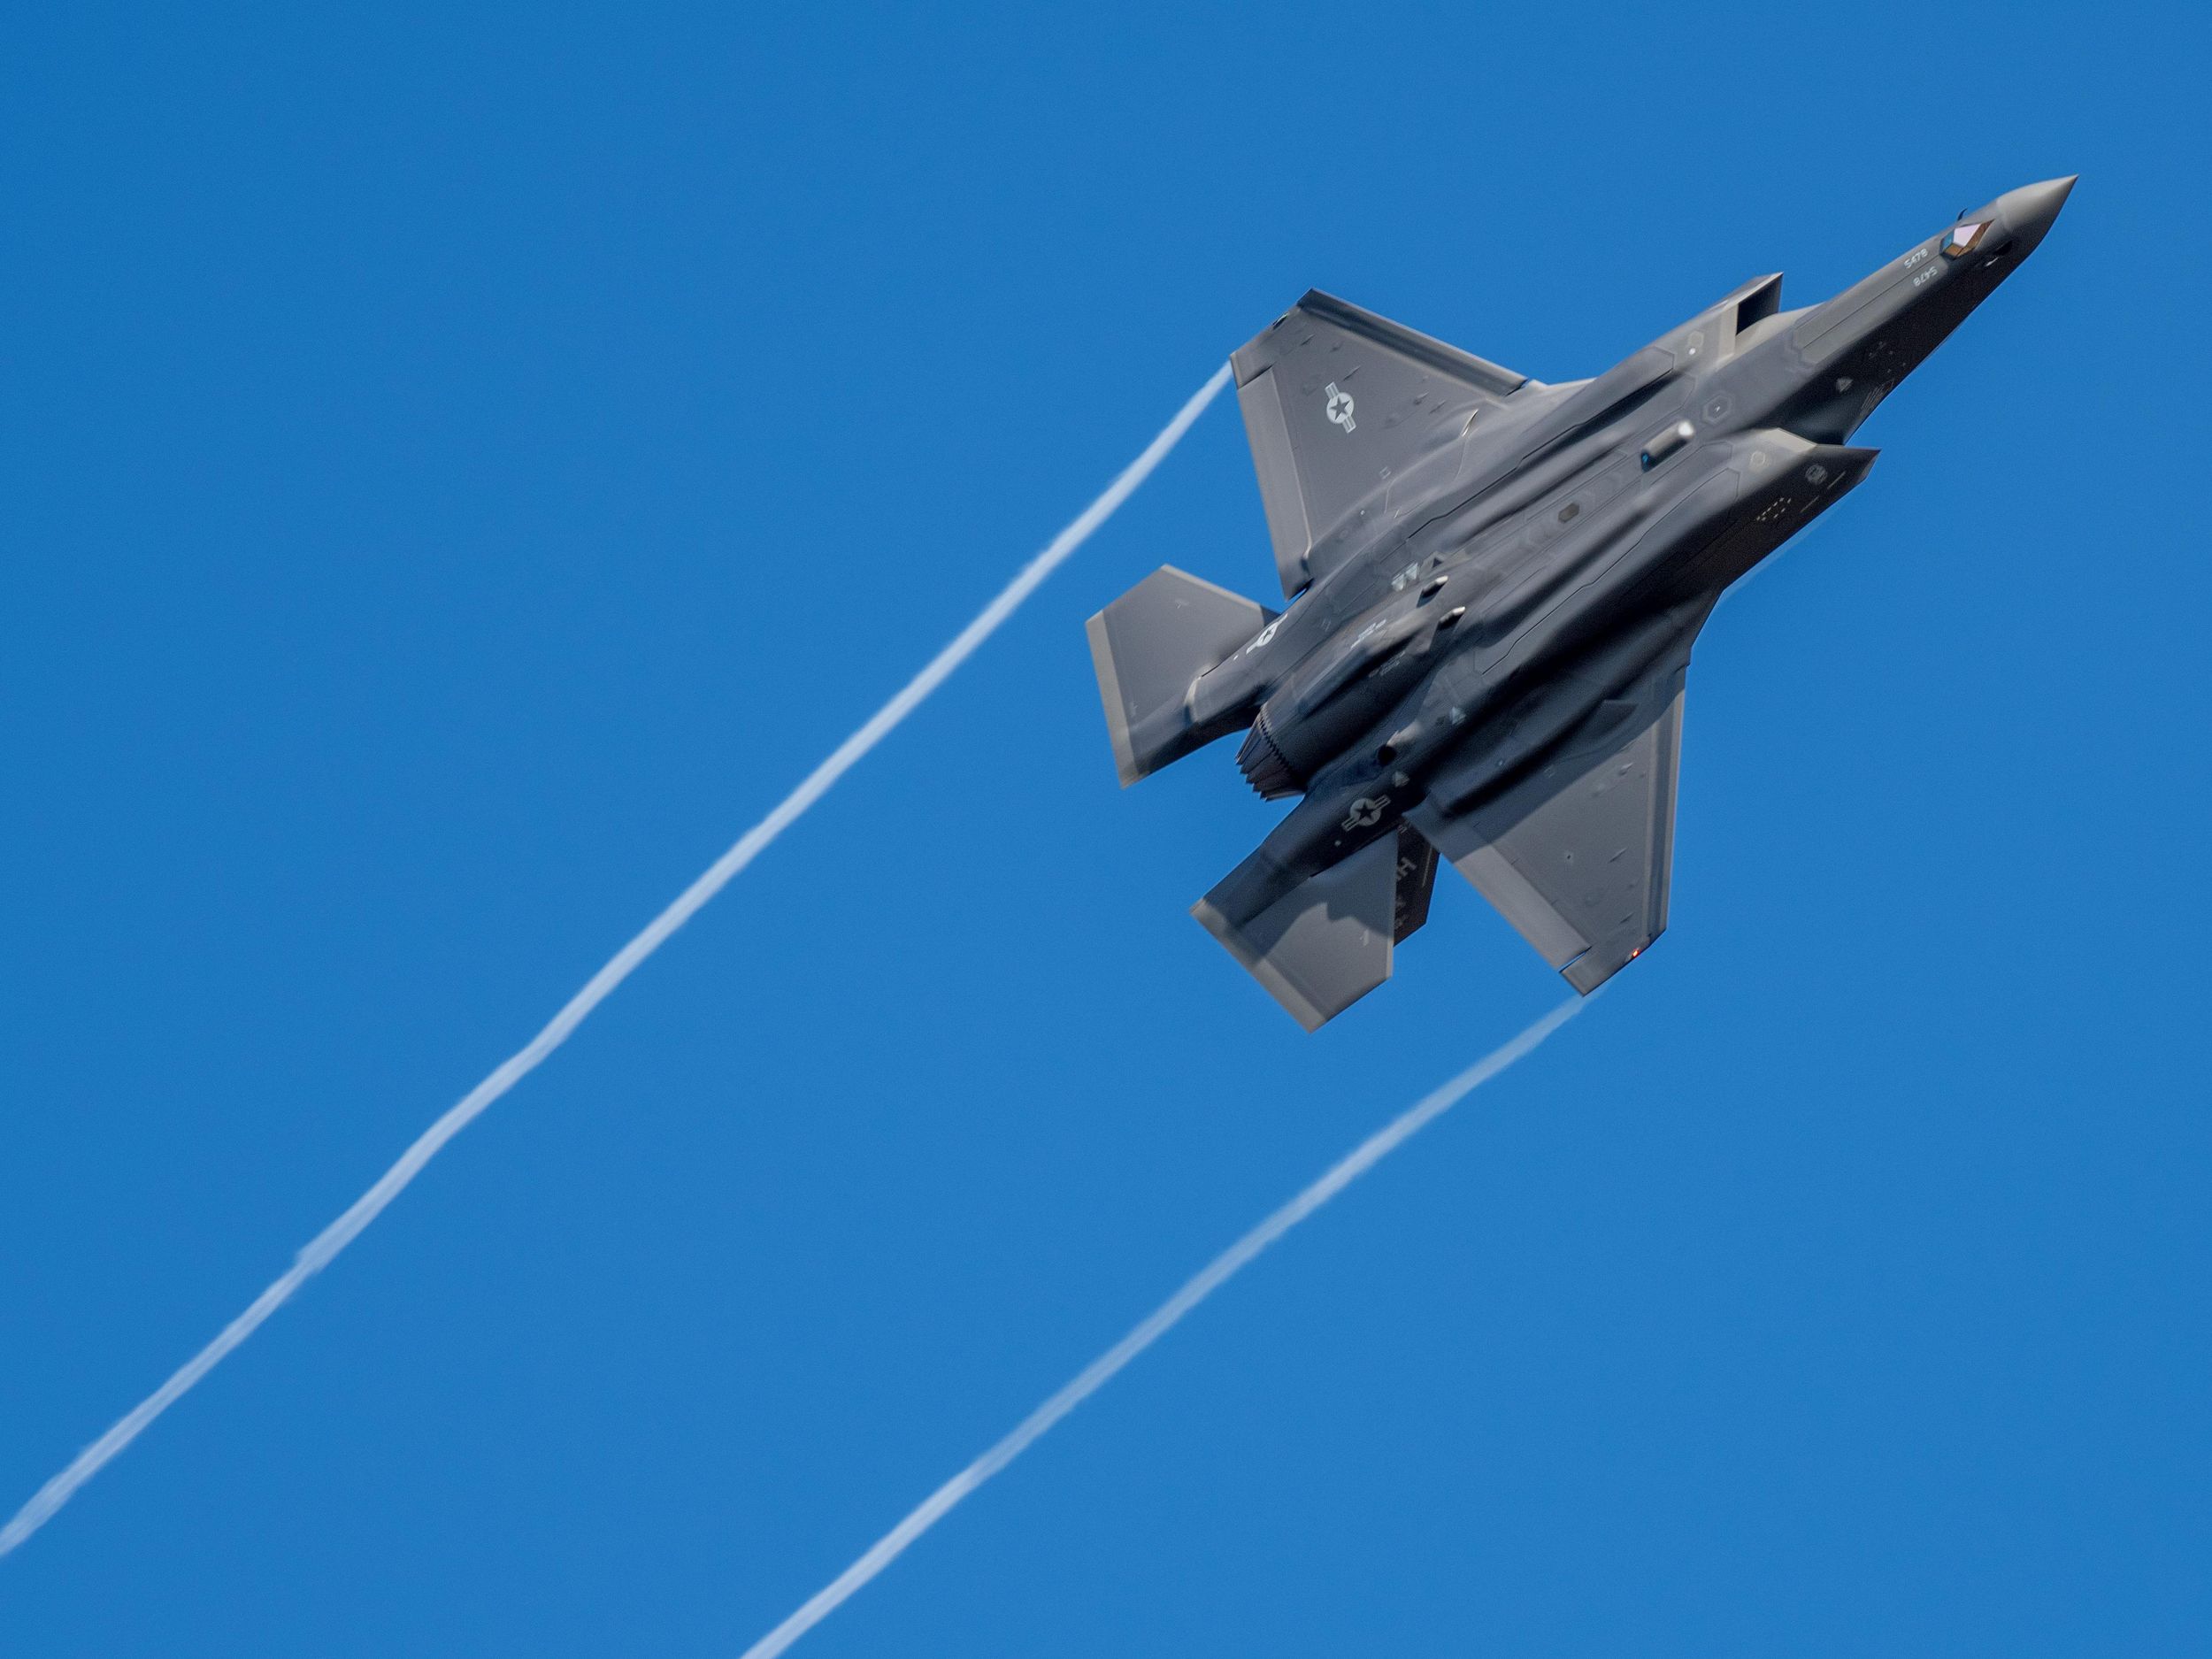  U.S. F-35 fighter jet flying in a blue sky